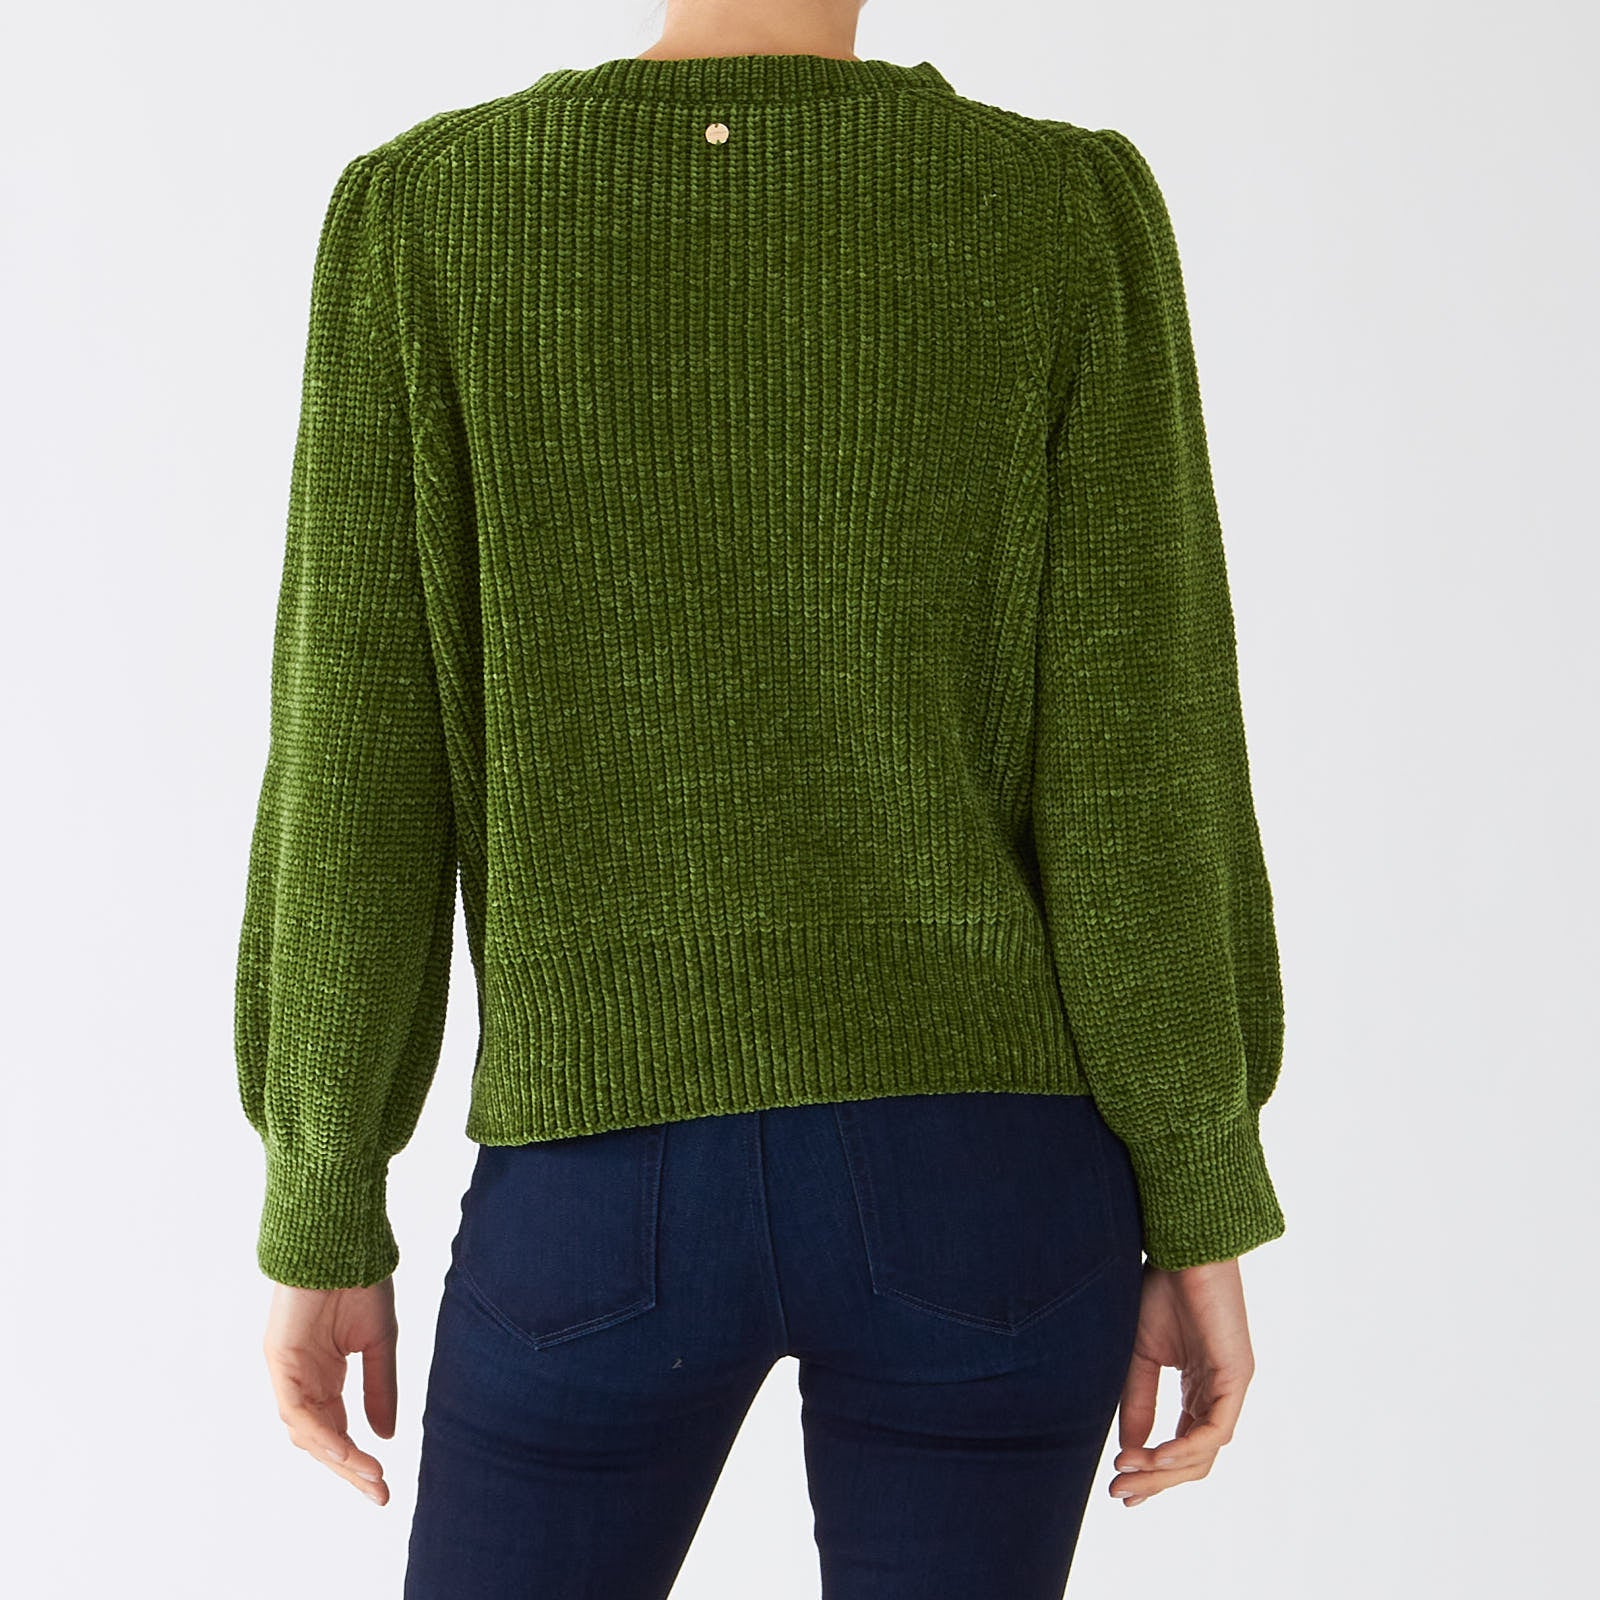 Orient Green Chenille Sweater